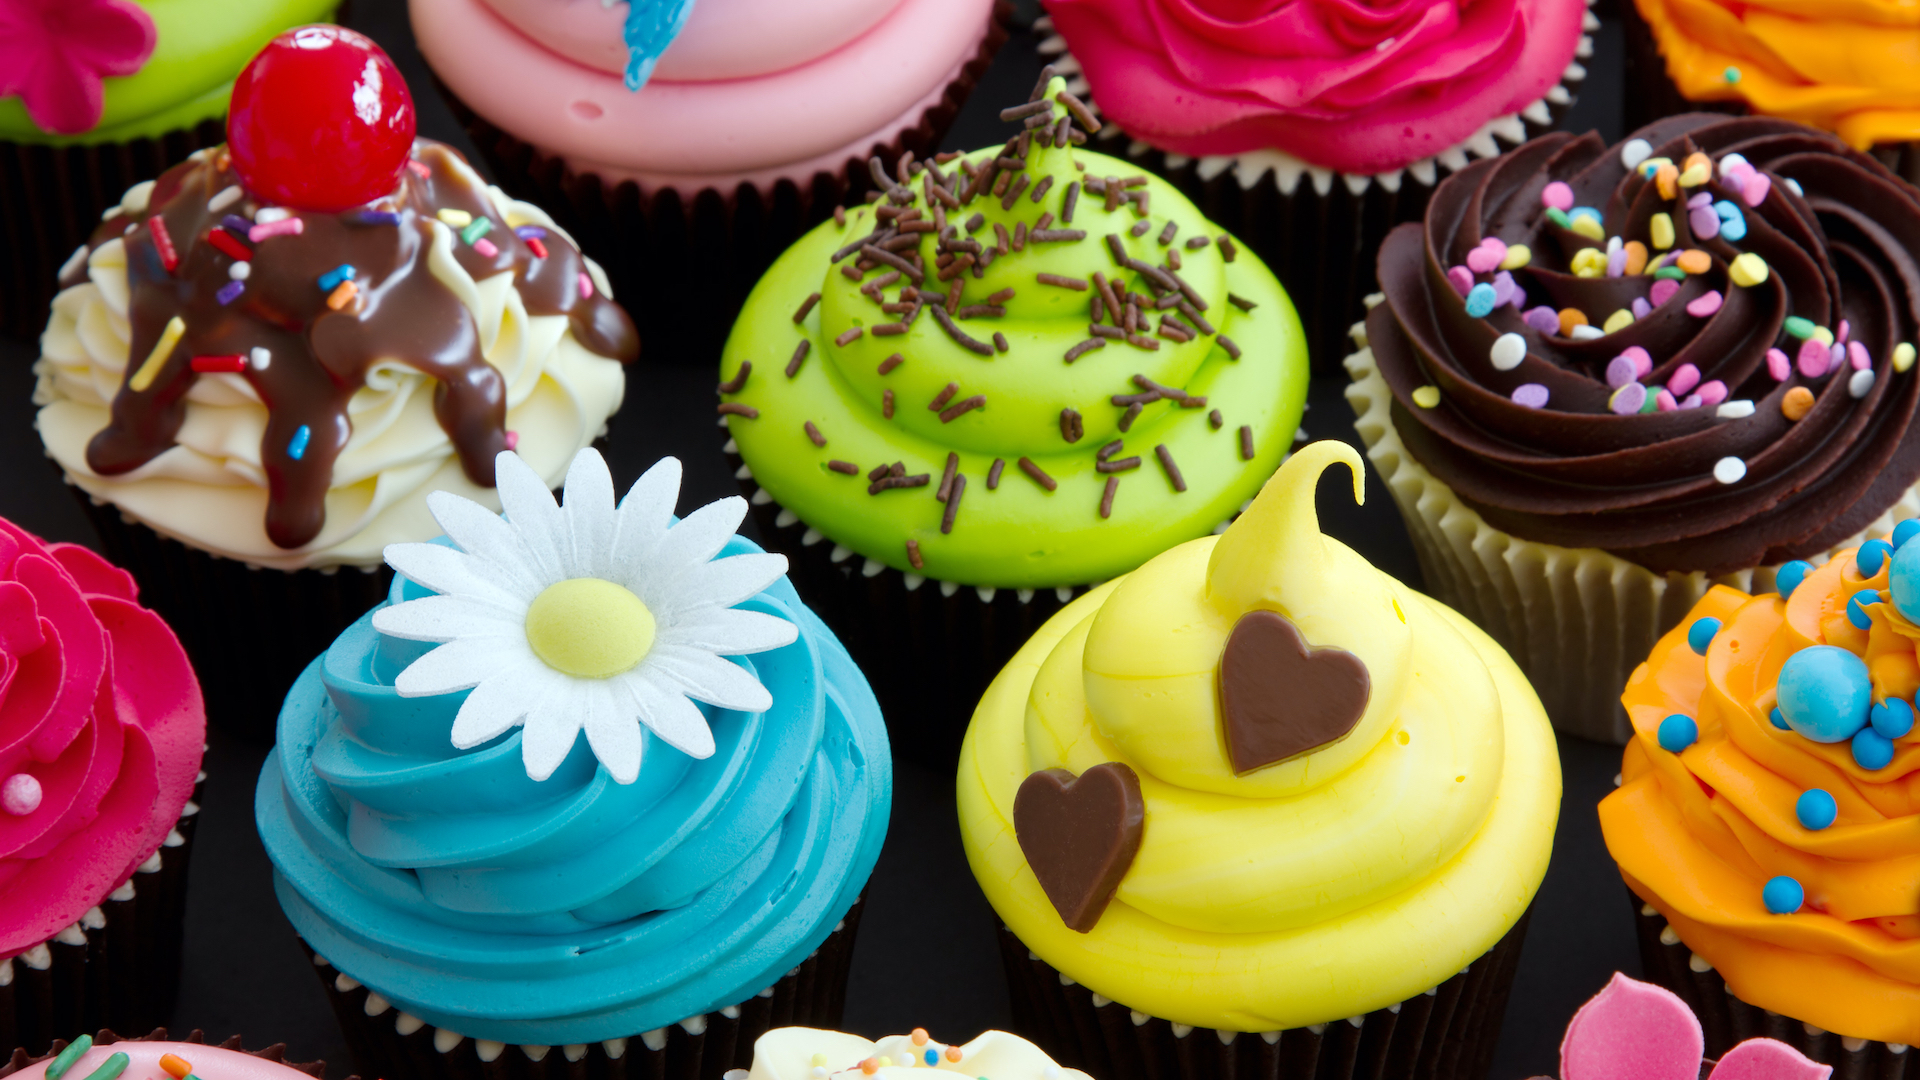 A selection of delicious cupcakes